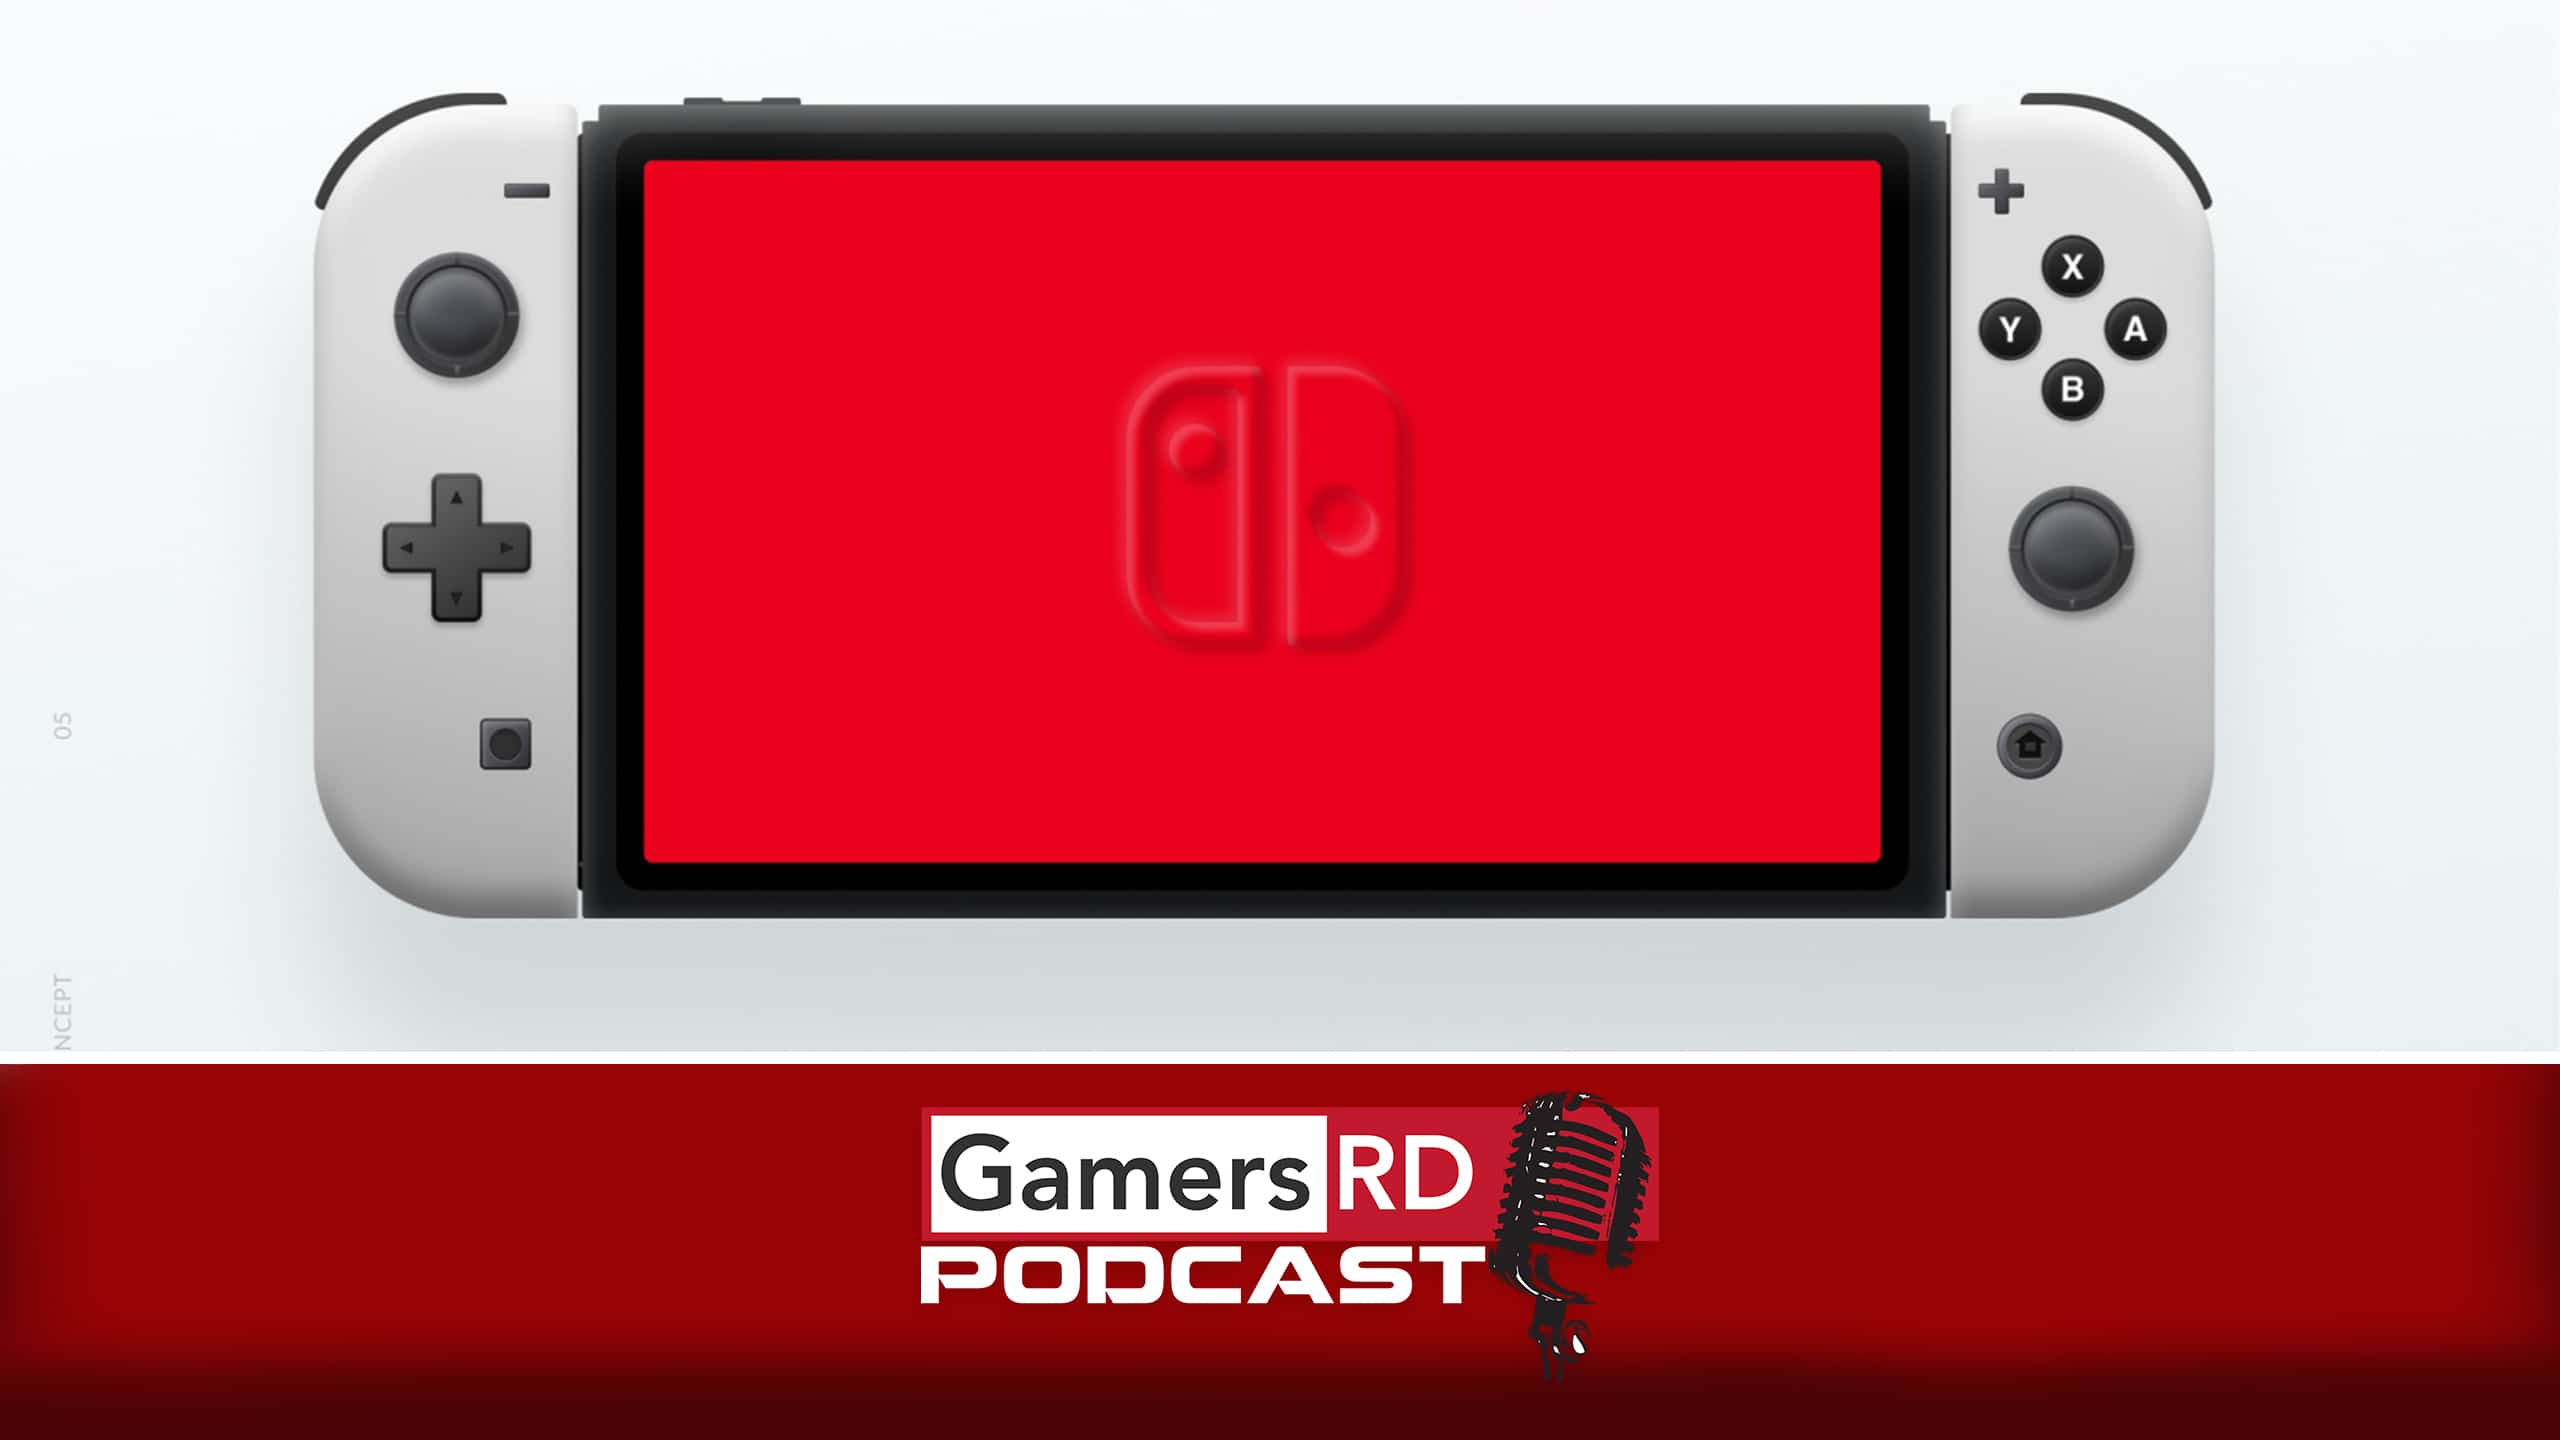 Podcast, Nintendo Switch, 3GamersRD